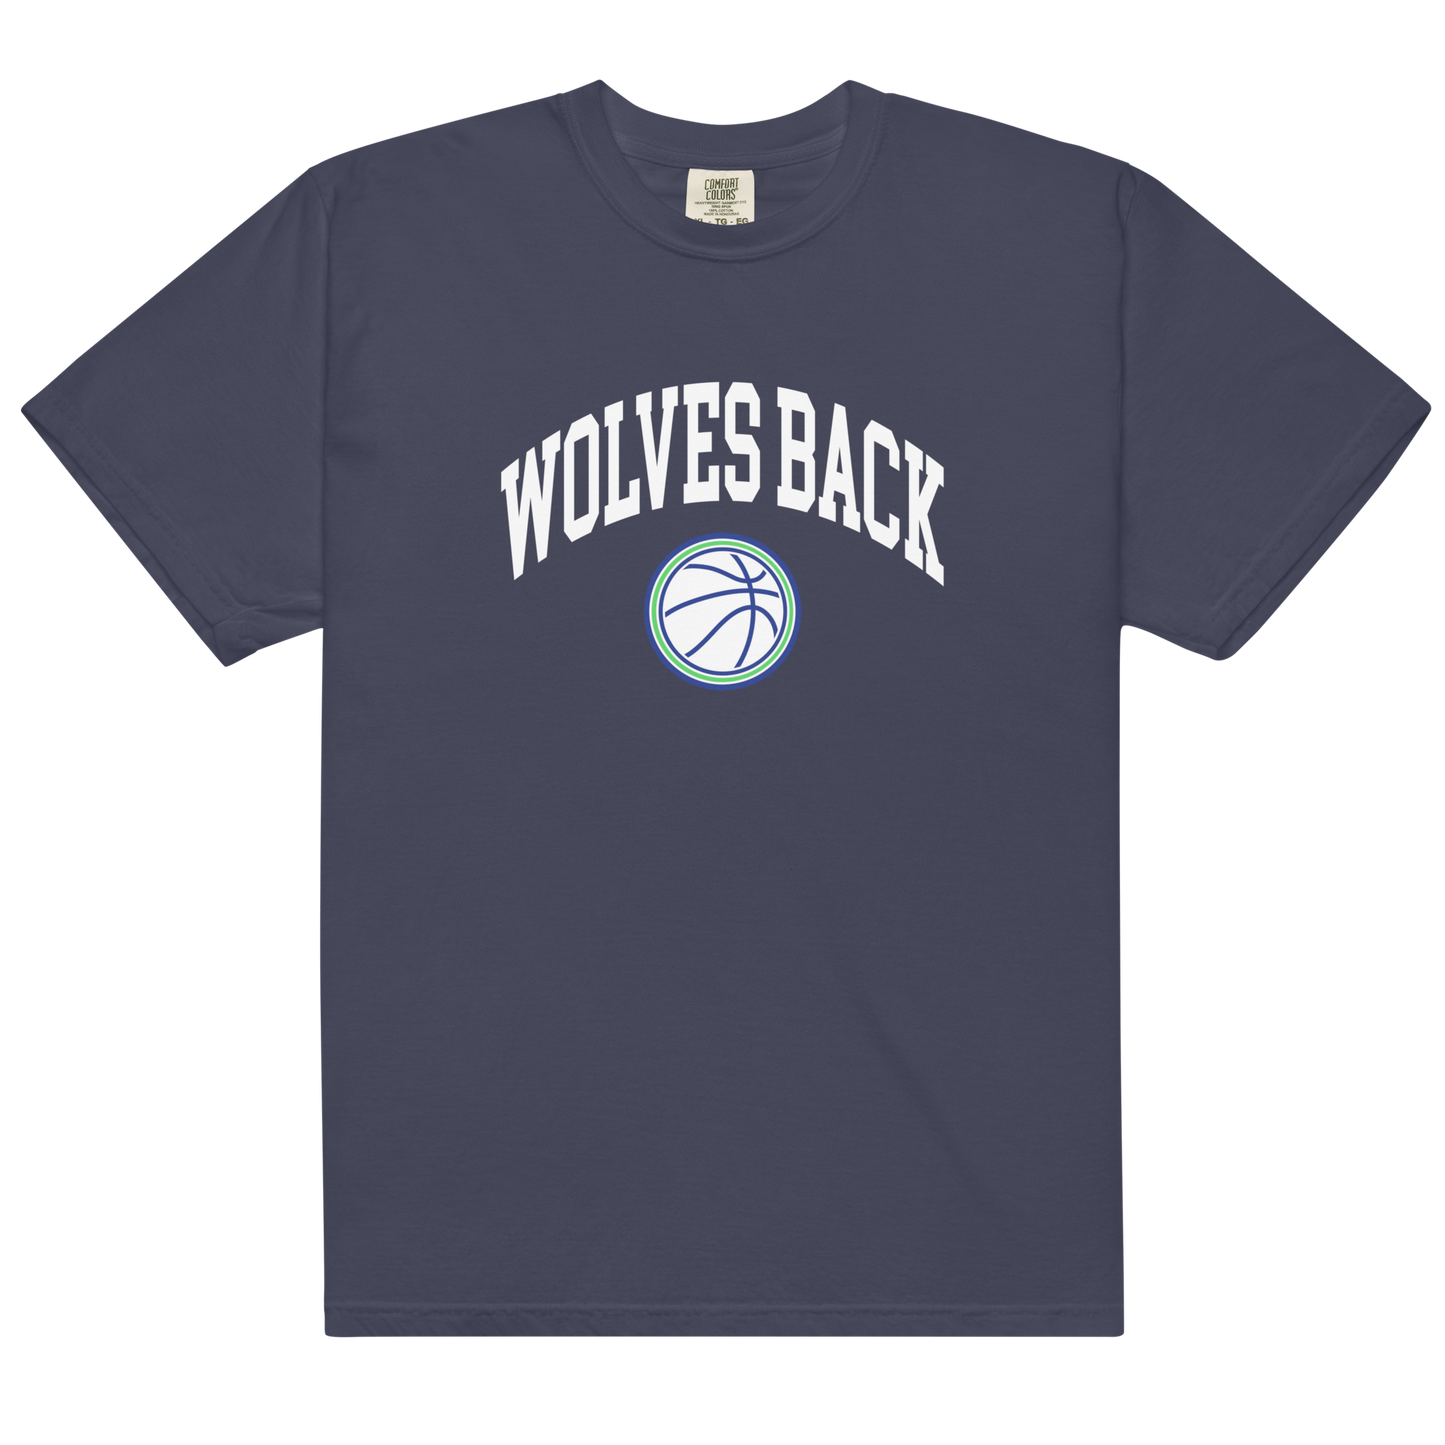 Wolves Back Tee